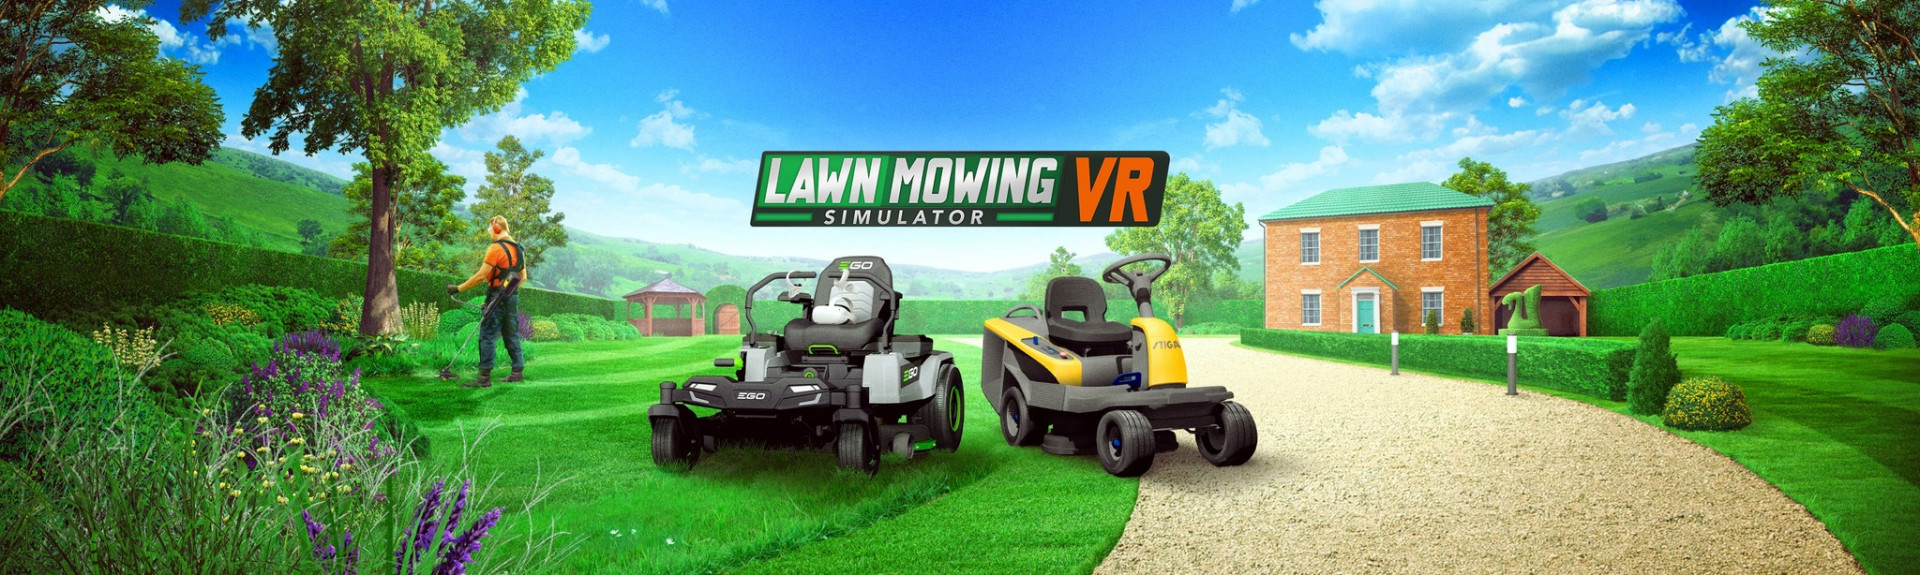 Lawn Mowing Simulator VR